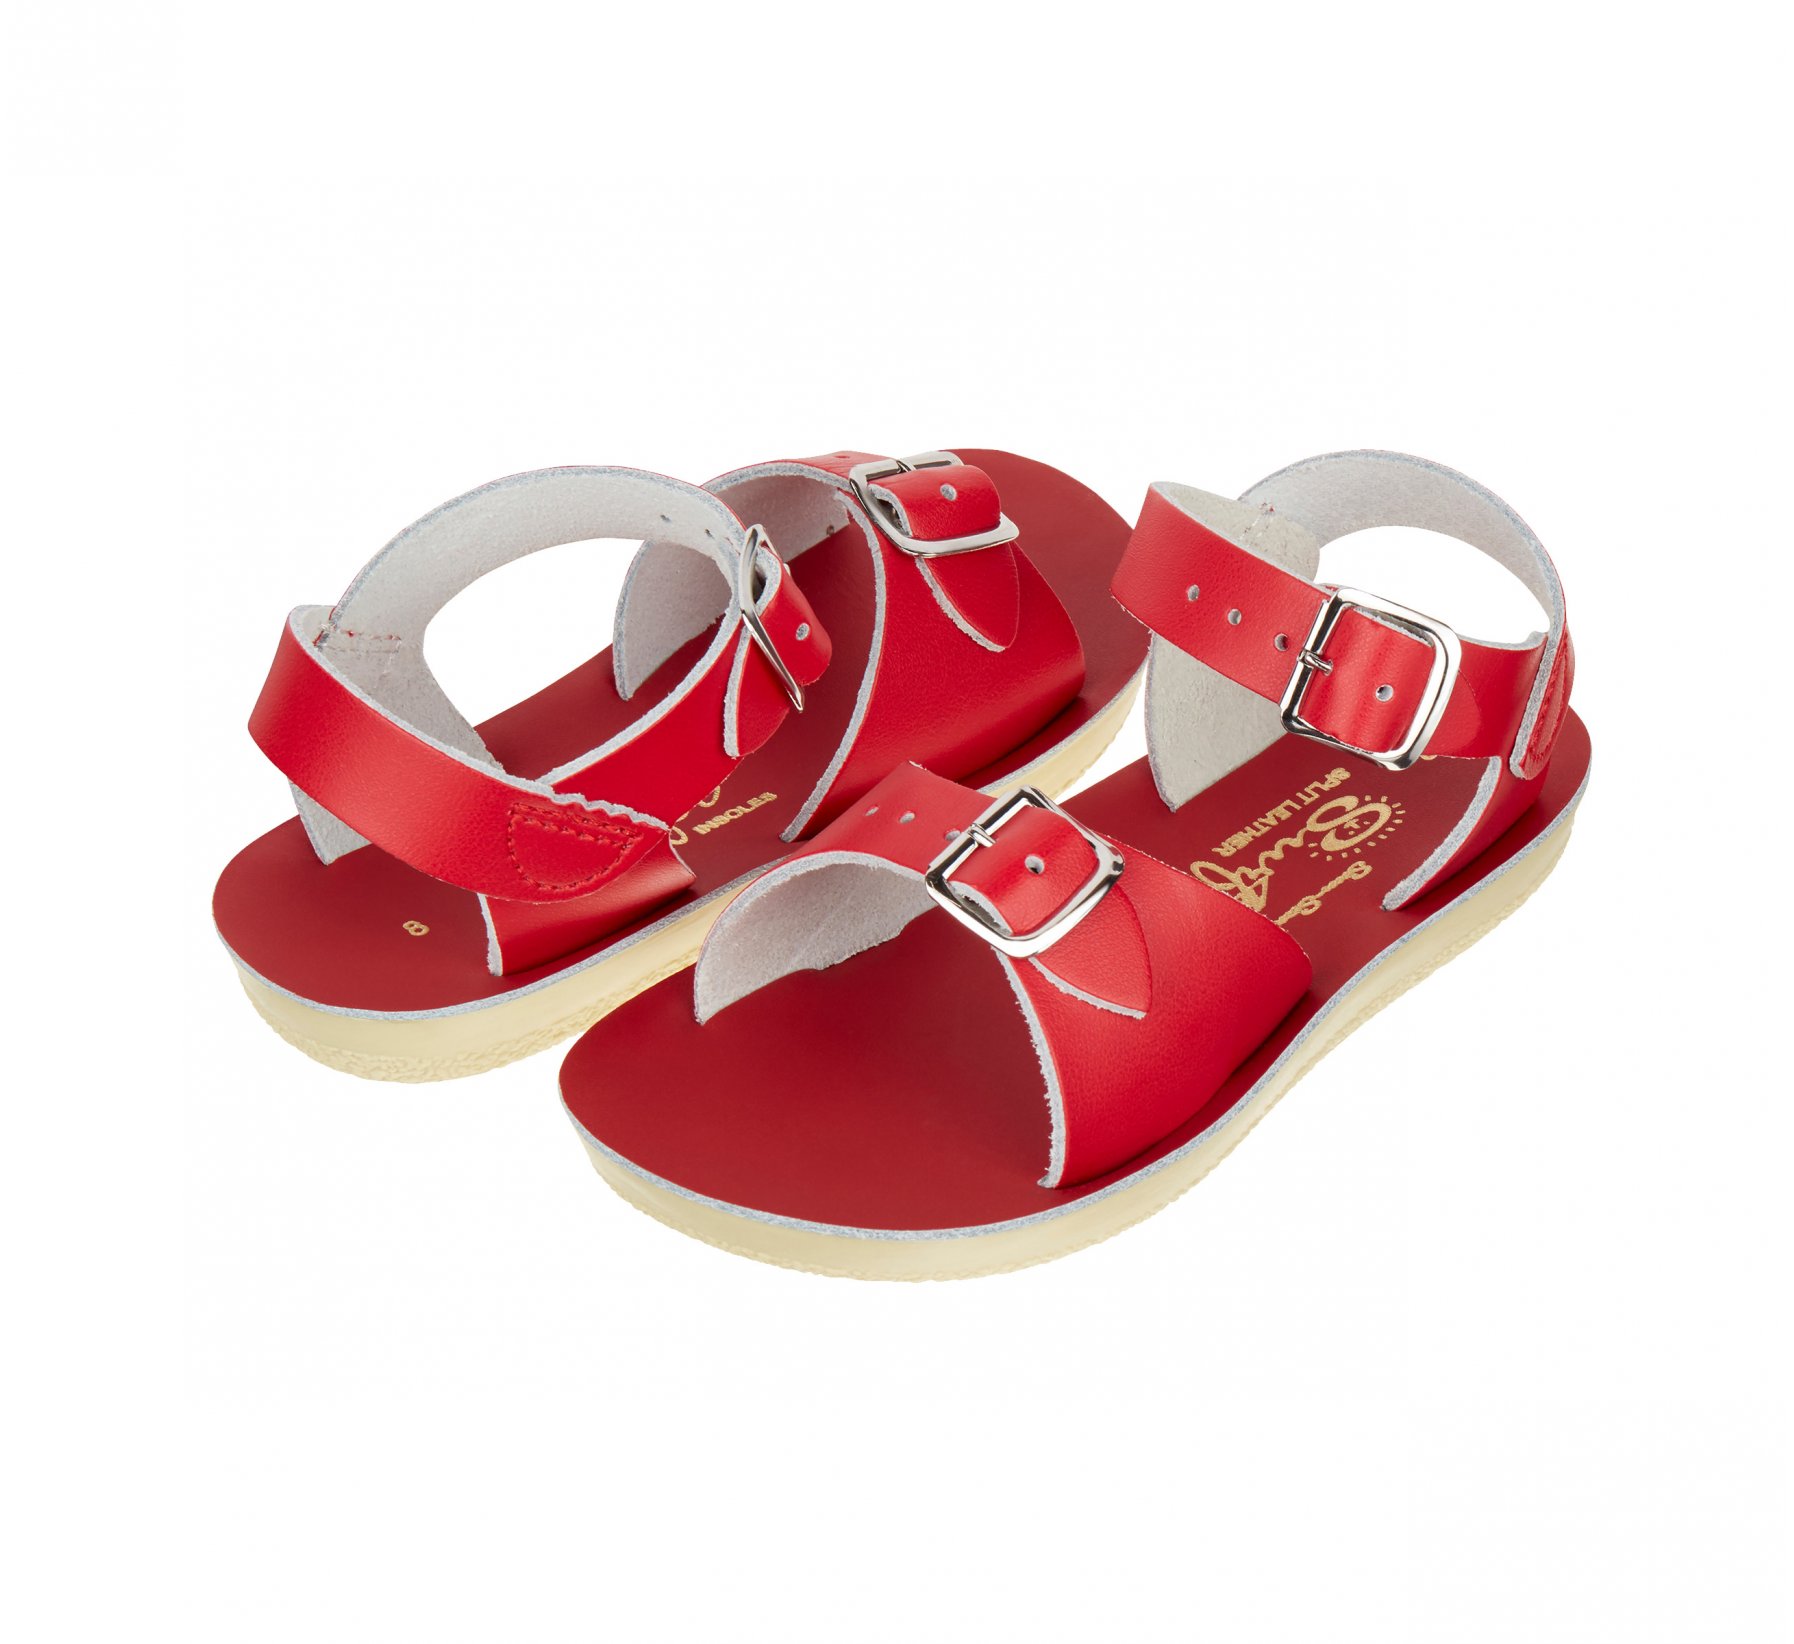 Surfer Red Kids Sandals - Salt Water Sandals